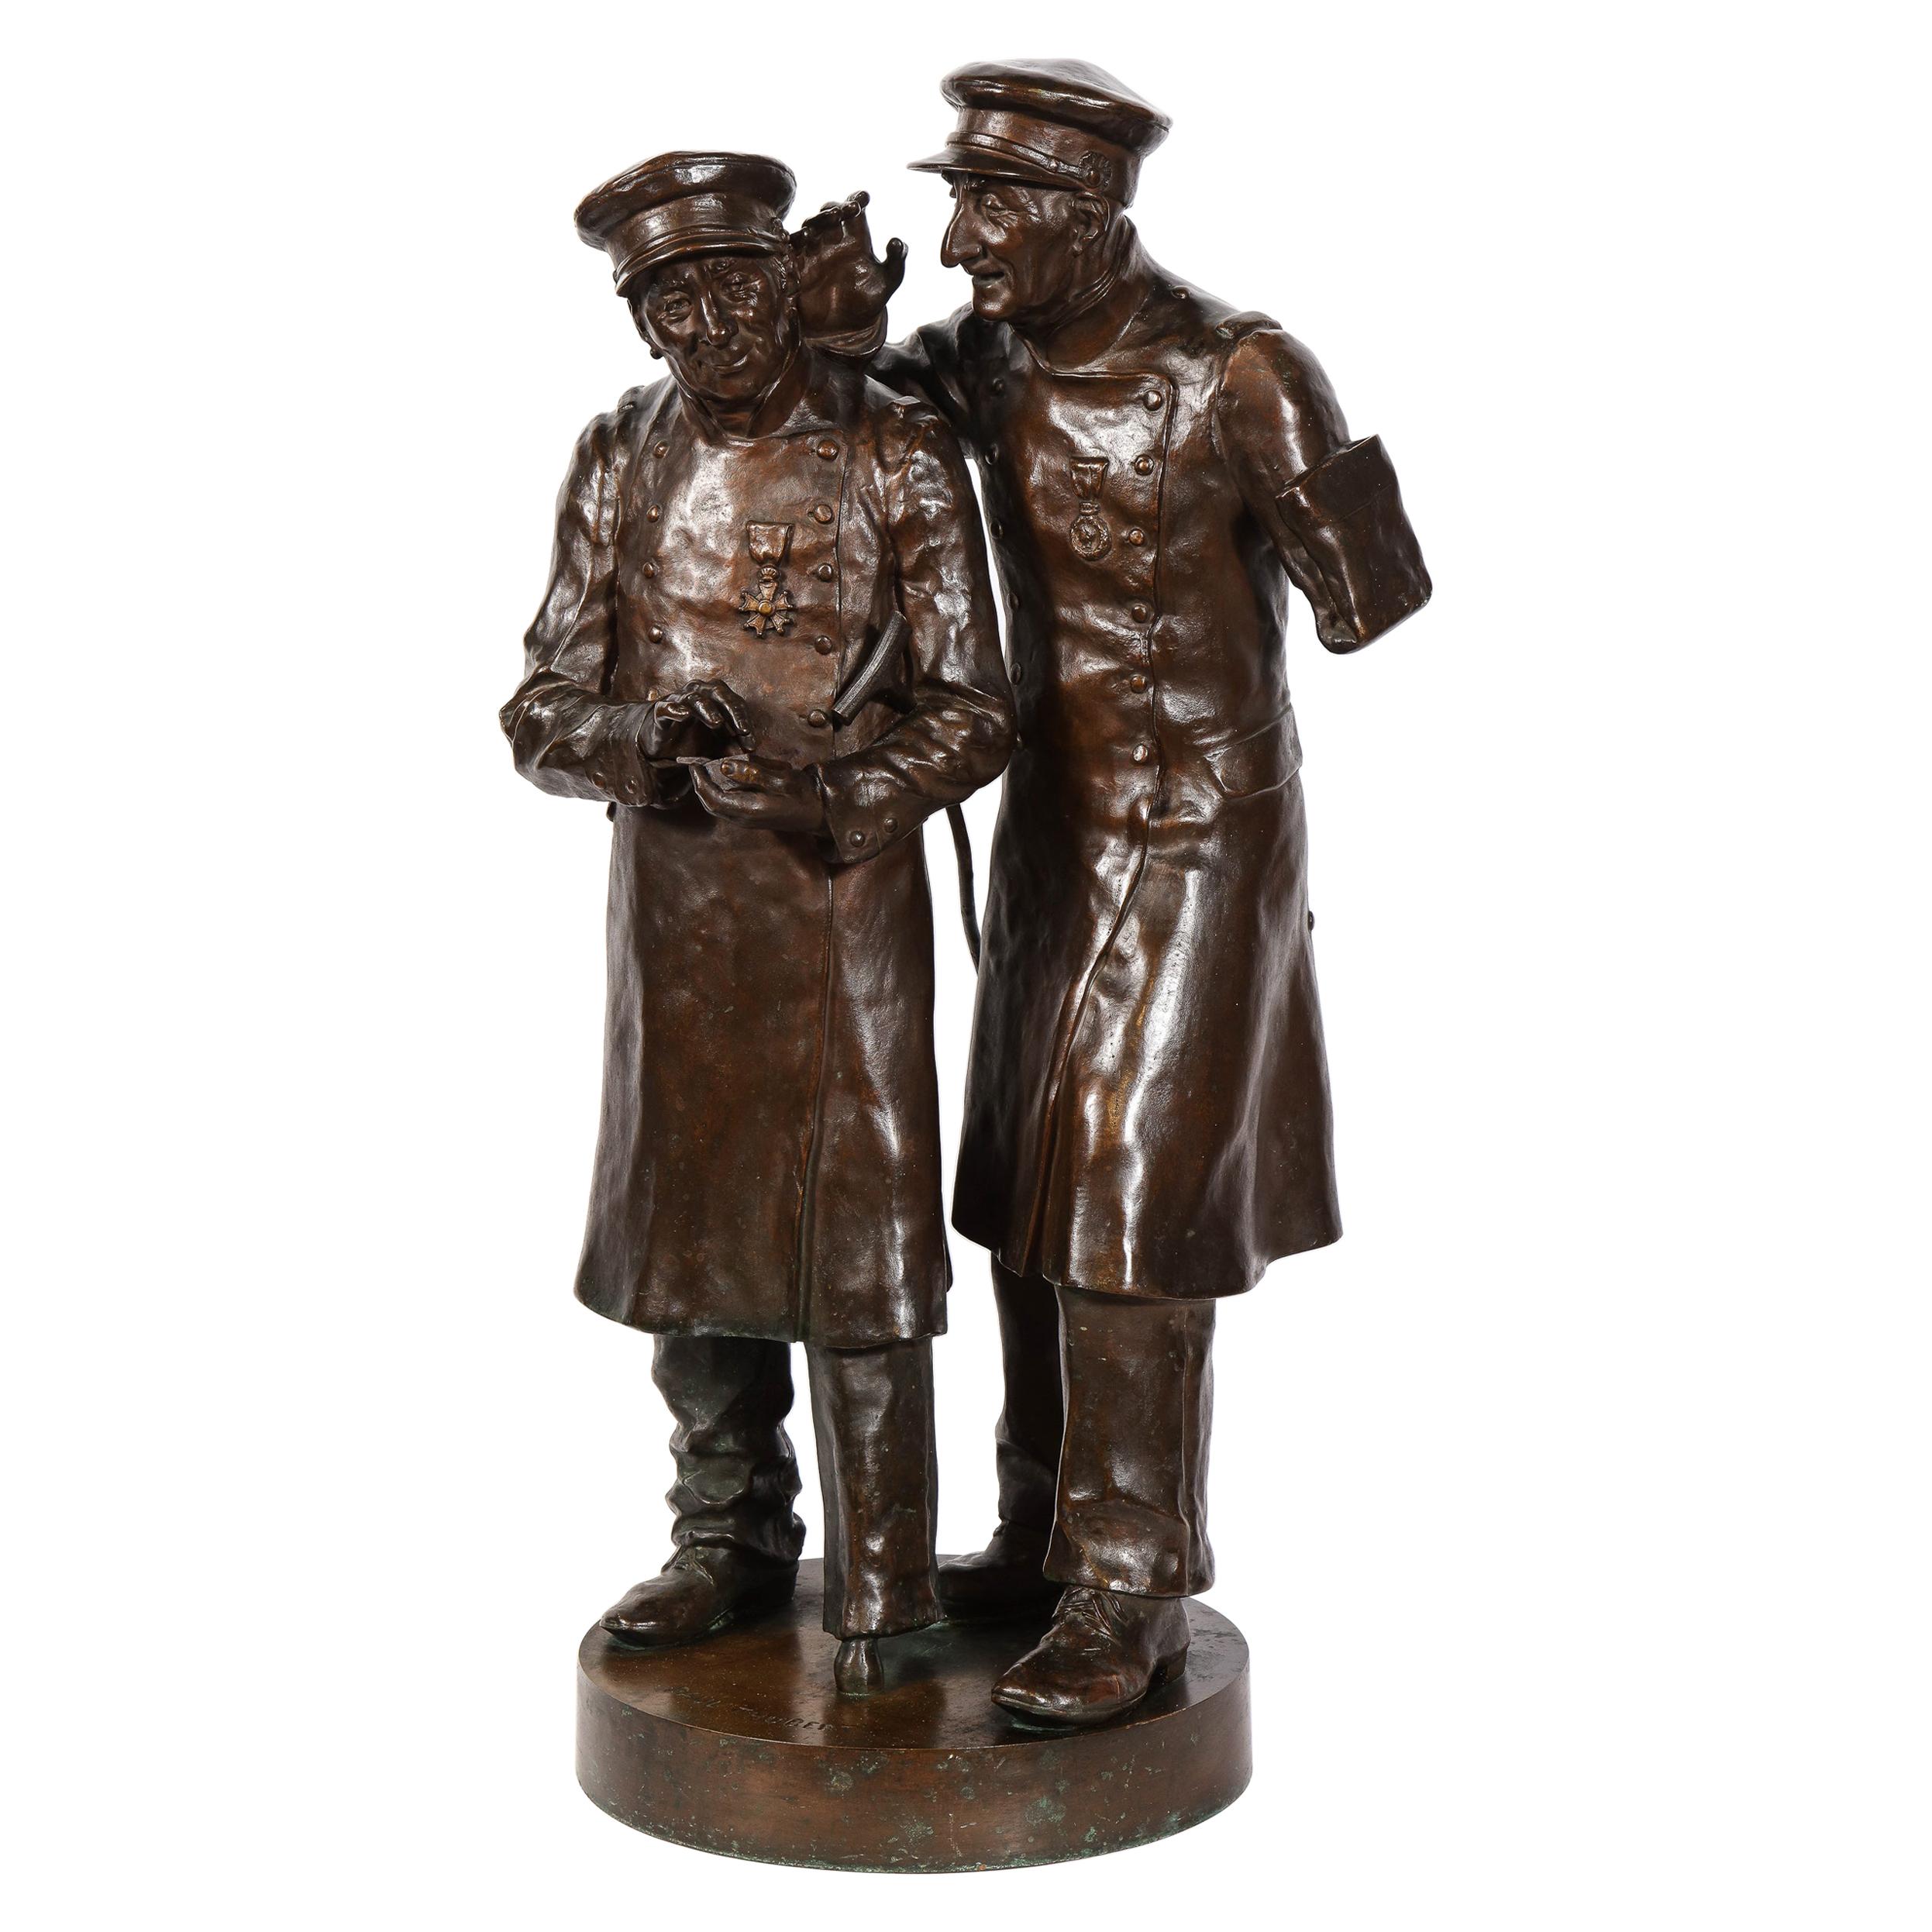 Paul Thubert 'English, 19th Century' a Large Bronze Sculpture of War Veterans For Sale